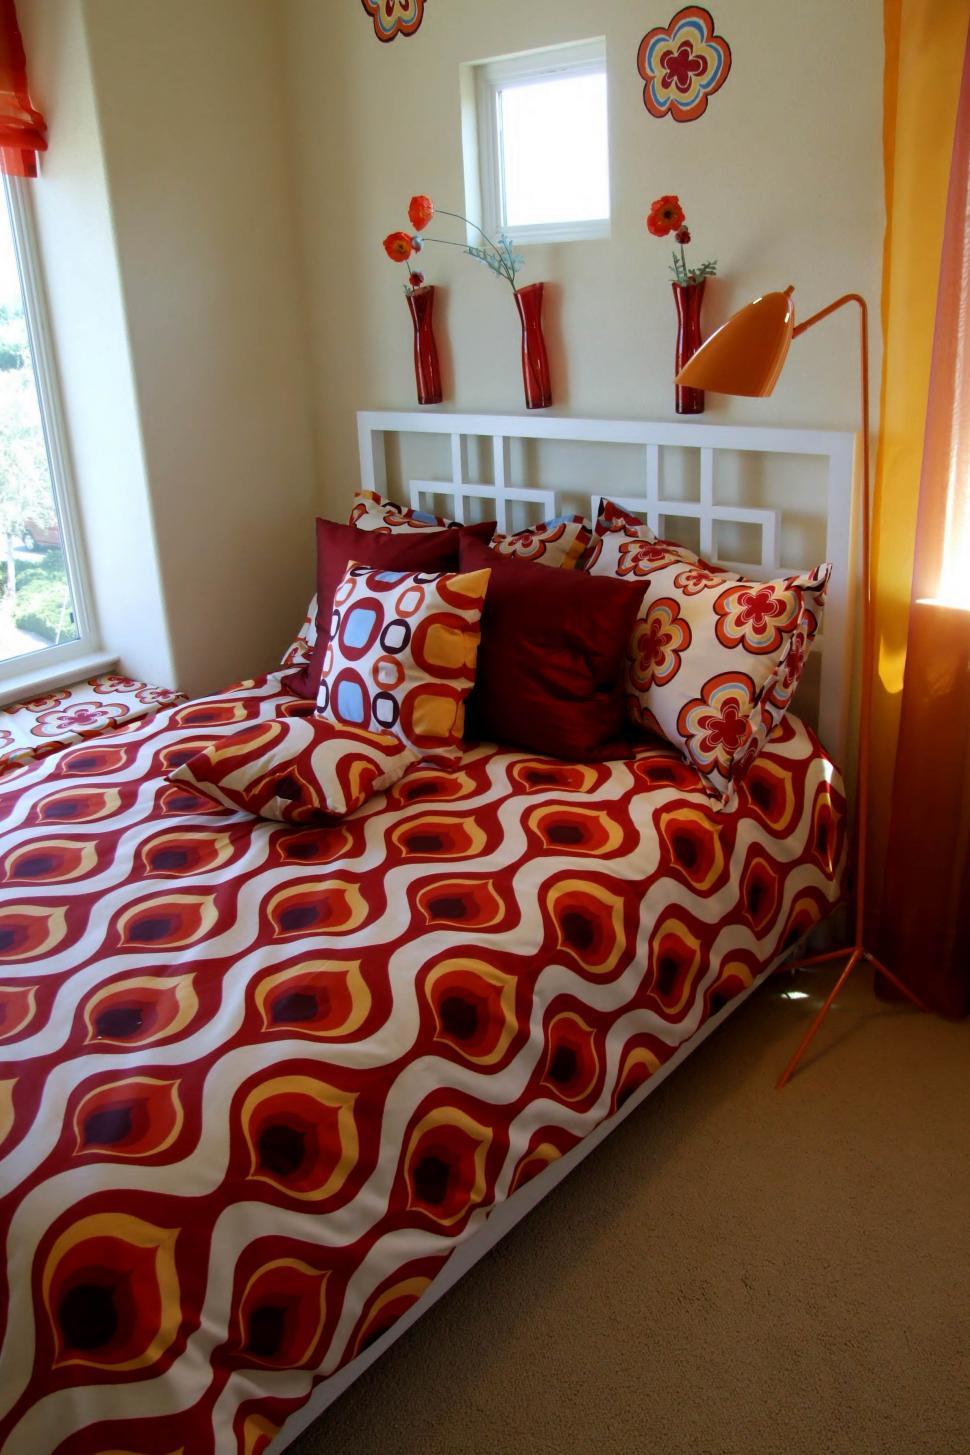 Free Image of Bedroom Design 